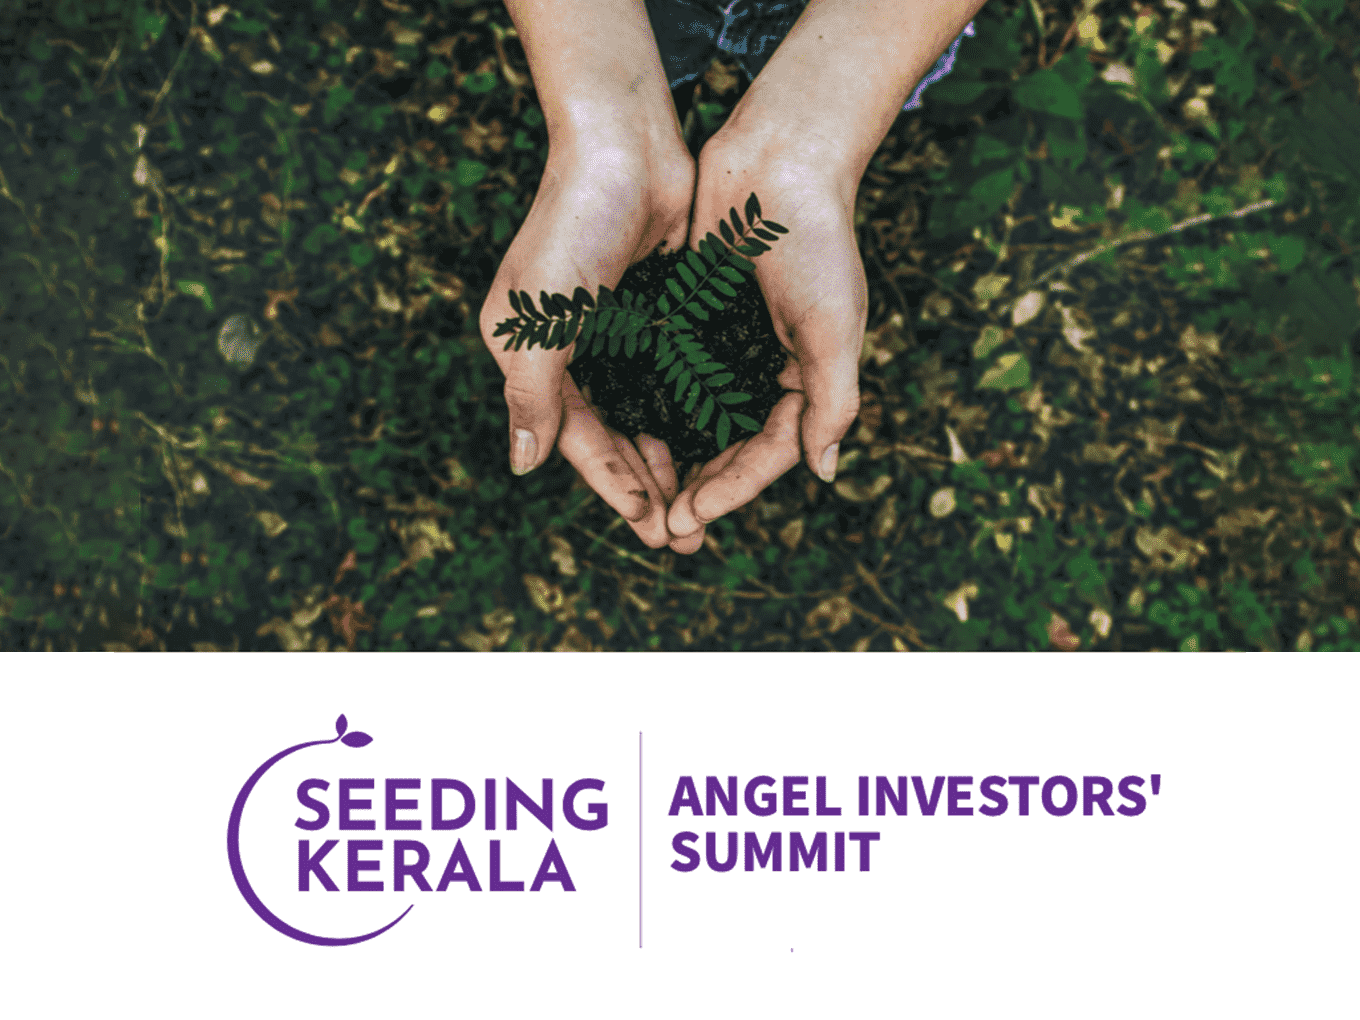 Seeding Kerala 2021 Summit: Sixth Edition Of KSUM’s Flagship Angel Investors Summit Goes Virtual